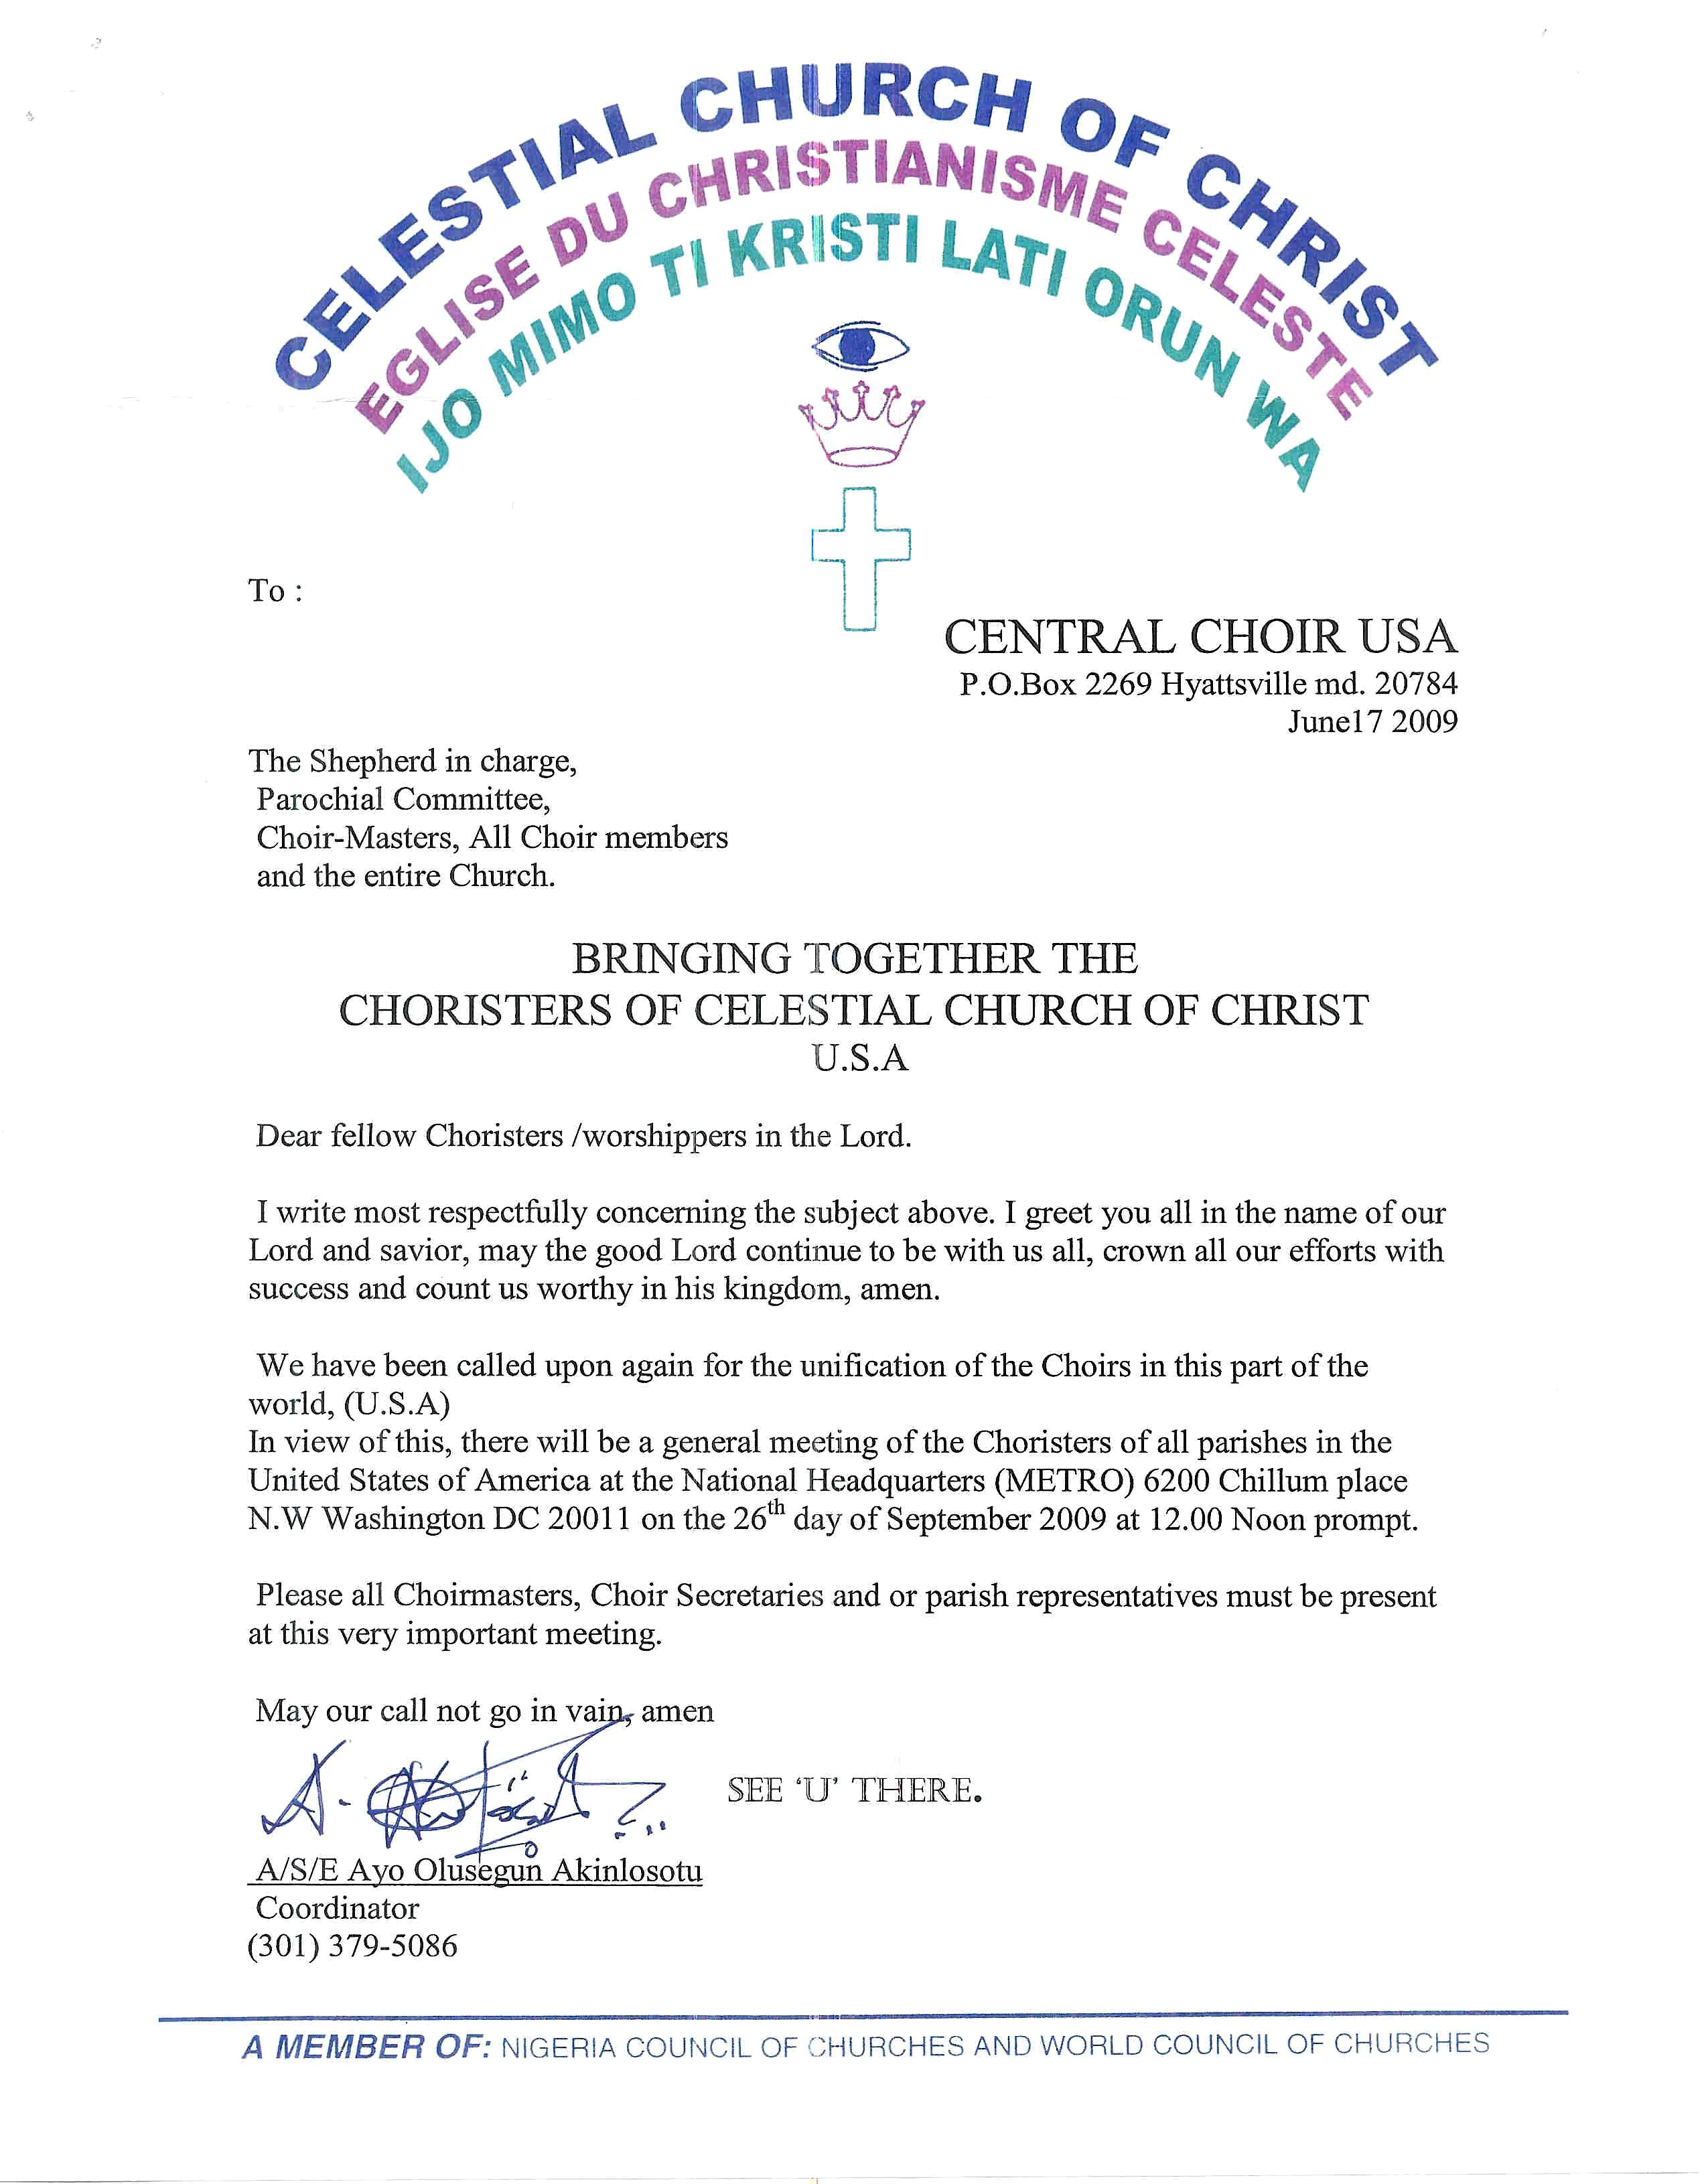 Celestial city choir - ccc - choirplace formation or foundation started